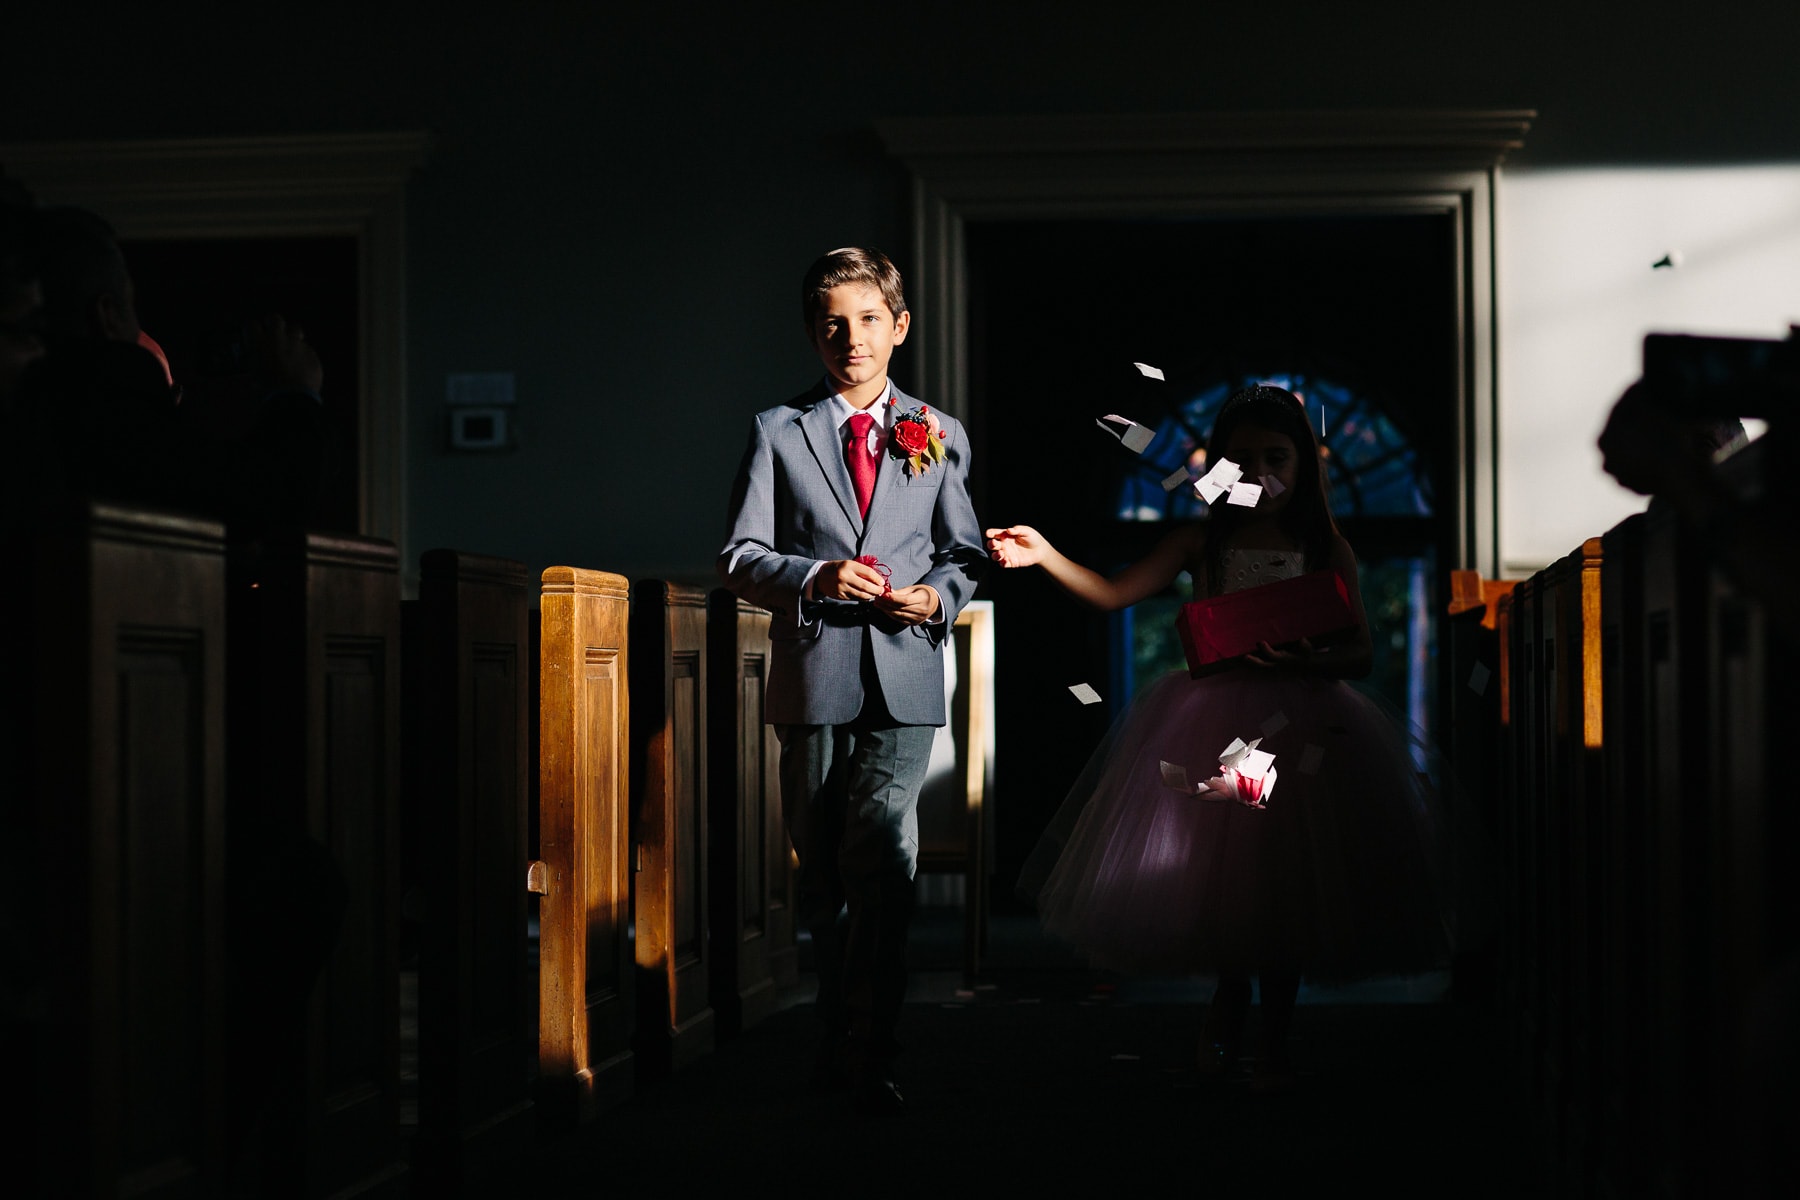 Kristina and Joe's wedding at Hope Central Church and the Milky Way in Jamaica Plain | Kelly Benvenuto Photography | Boston Wedding Photographer